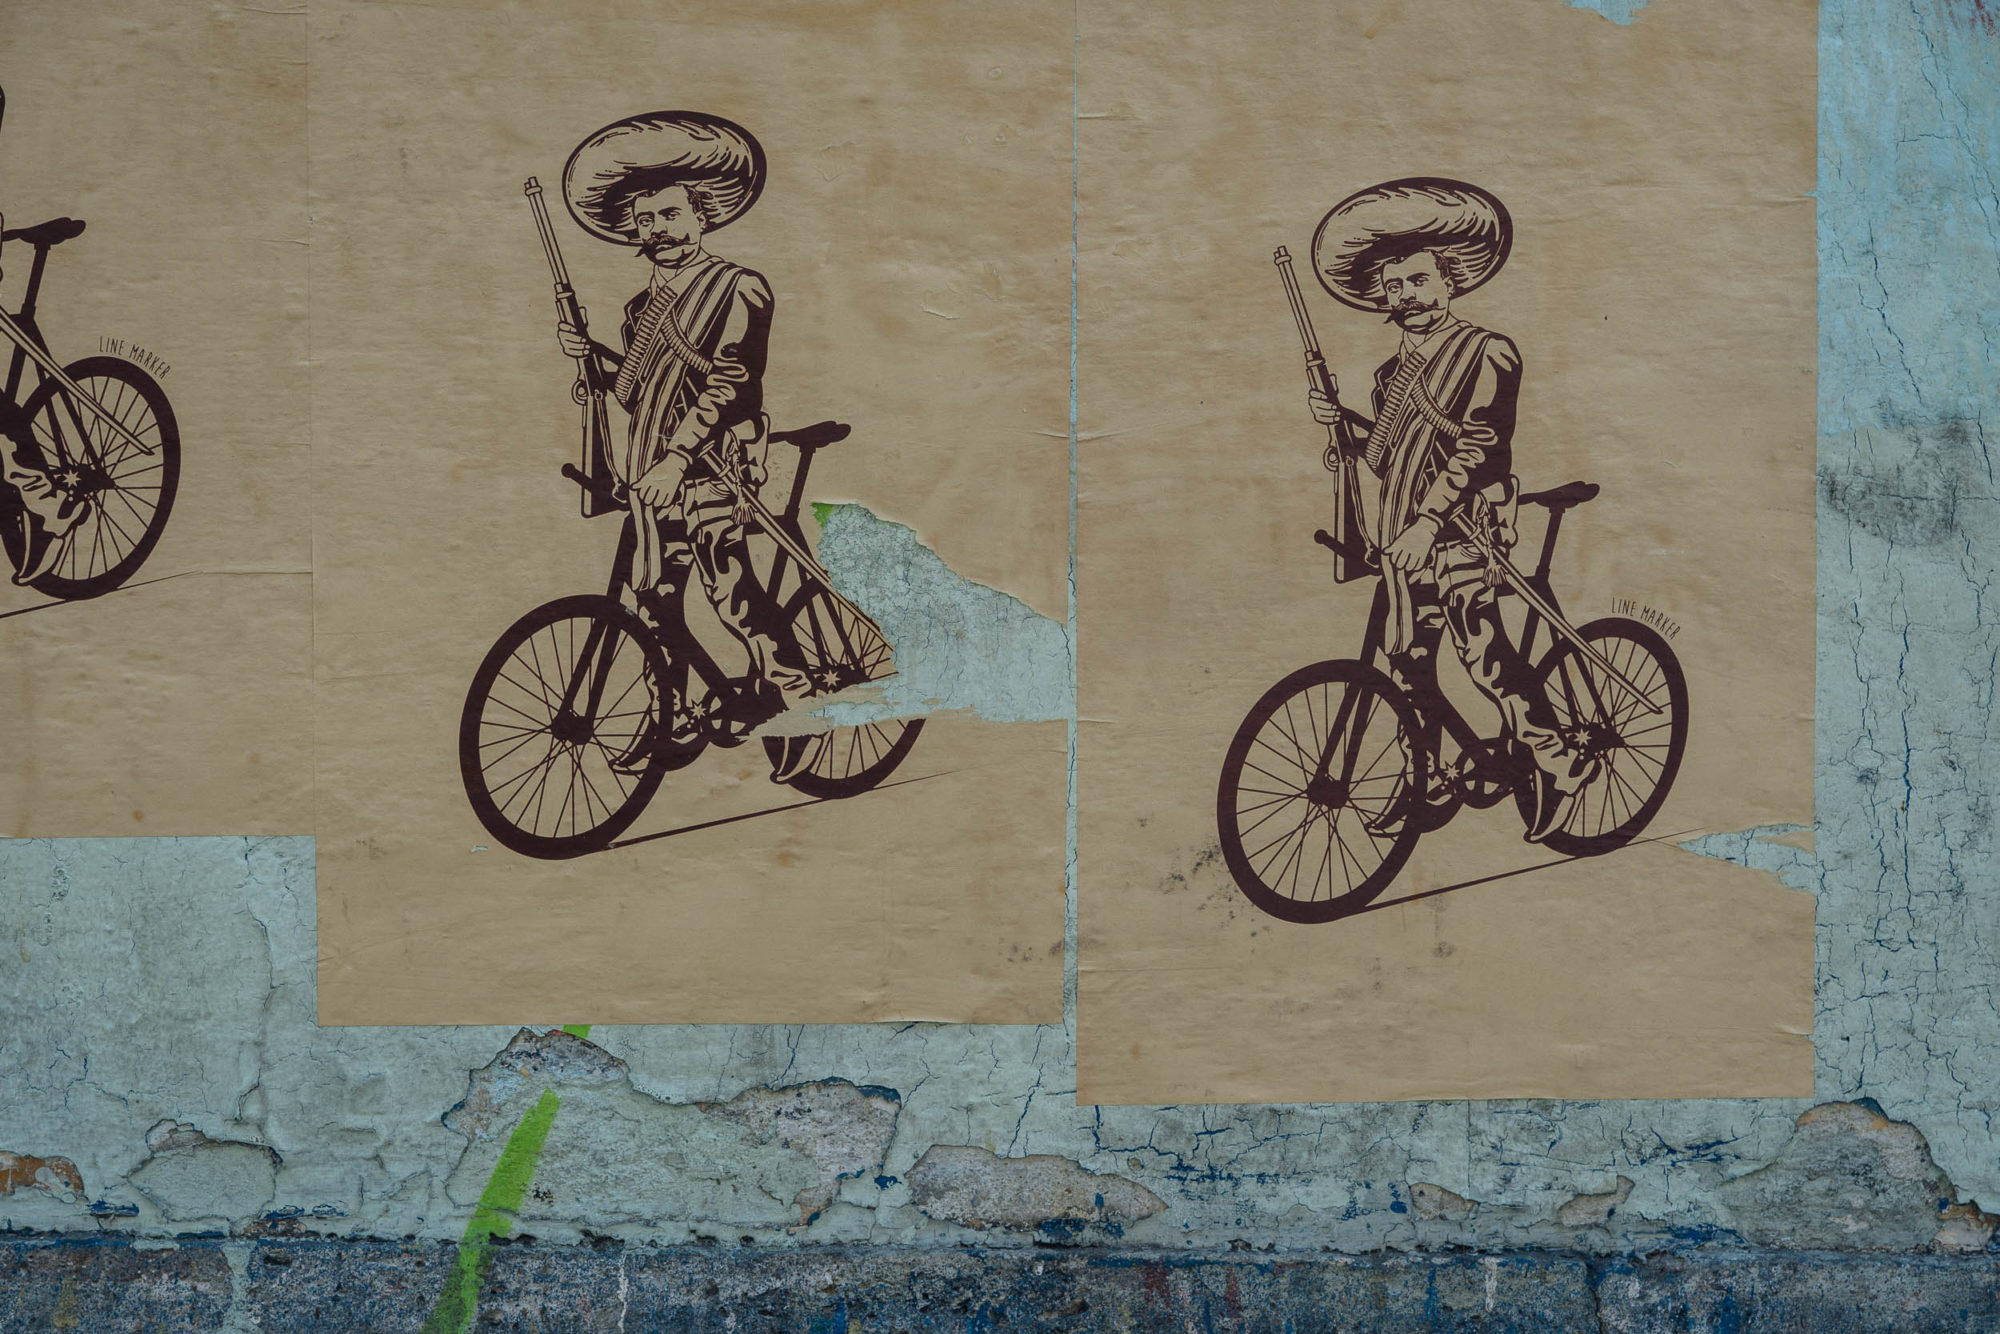 Oaxaca Bikepacking Routes